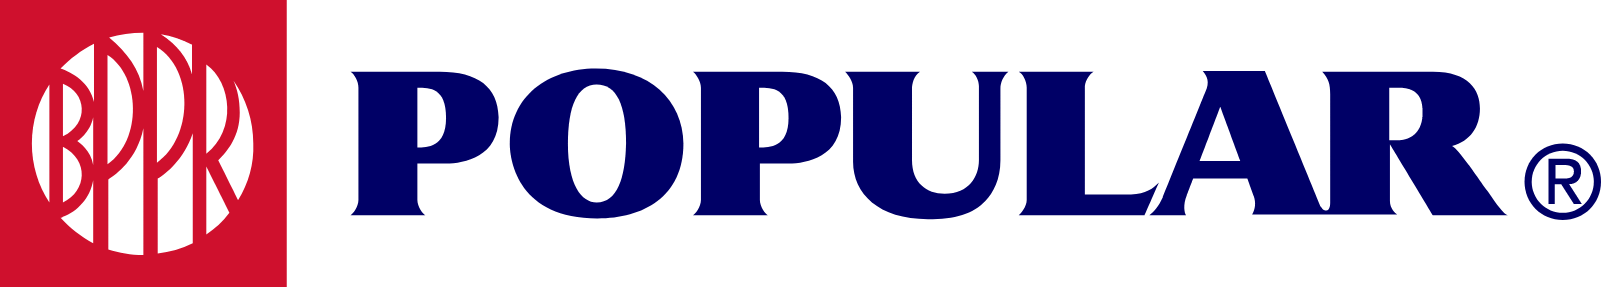 Banco Popular  logo large (transparent PNG)